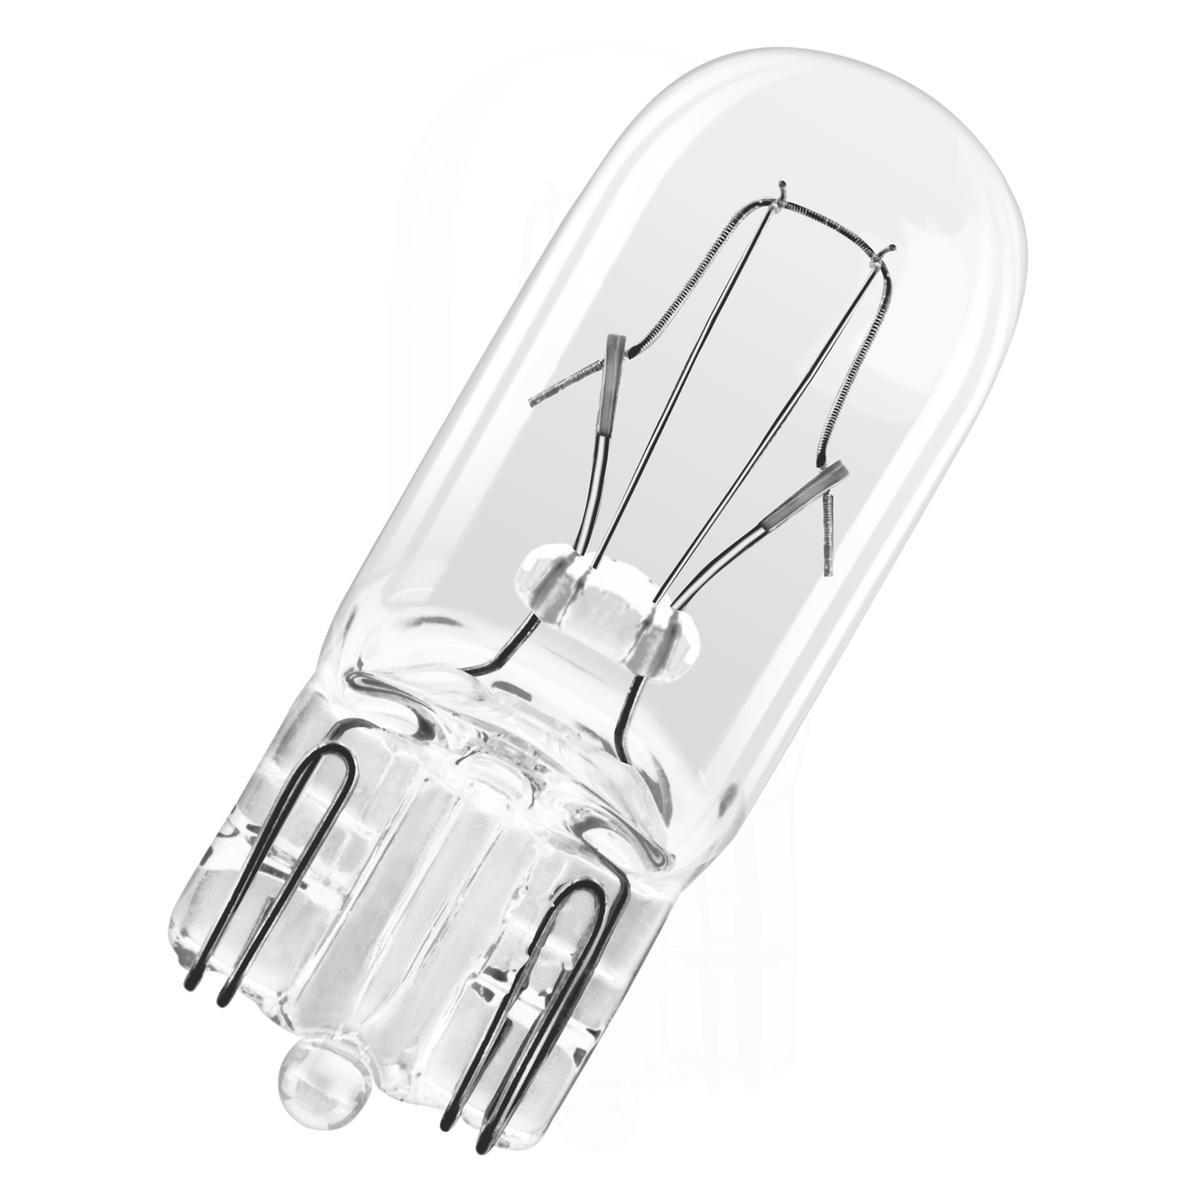 5 W Osram 2845 Original Lamps with Glass WBases Set of 10 24 V 